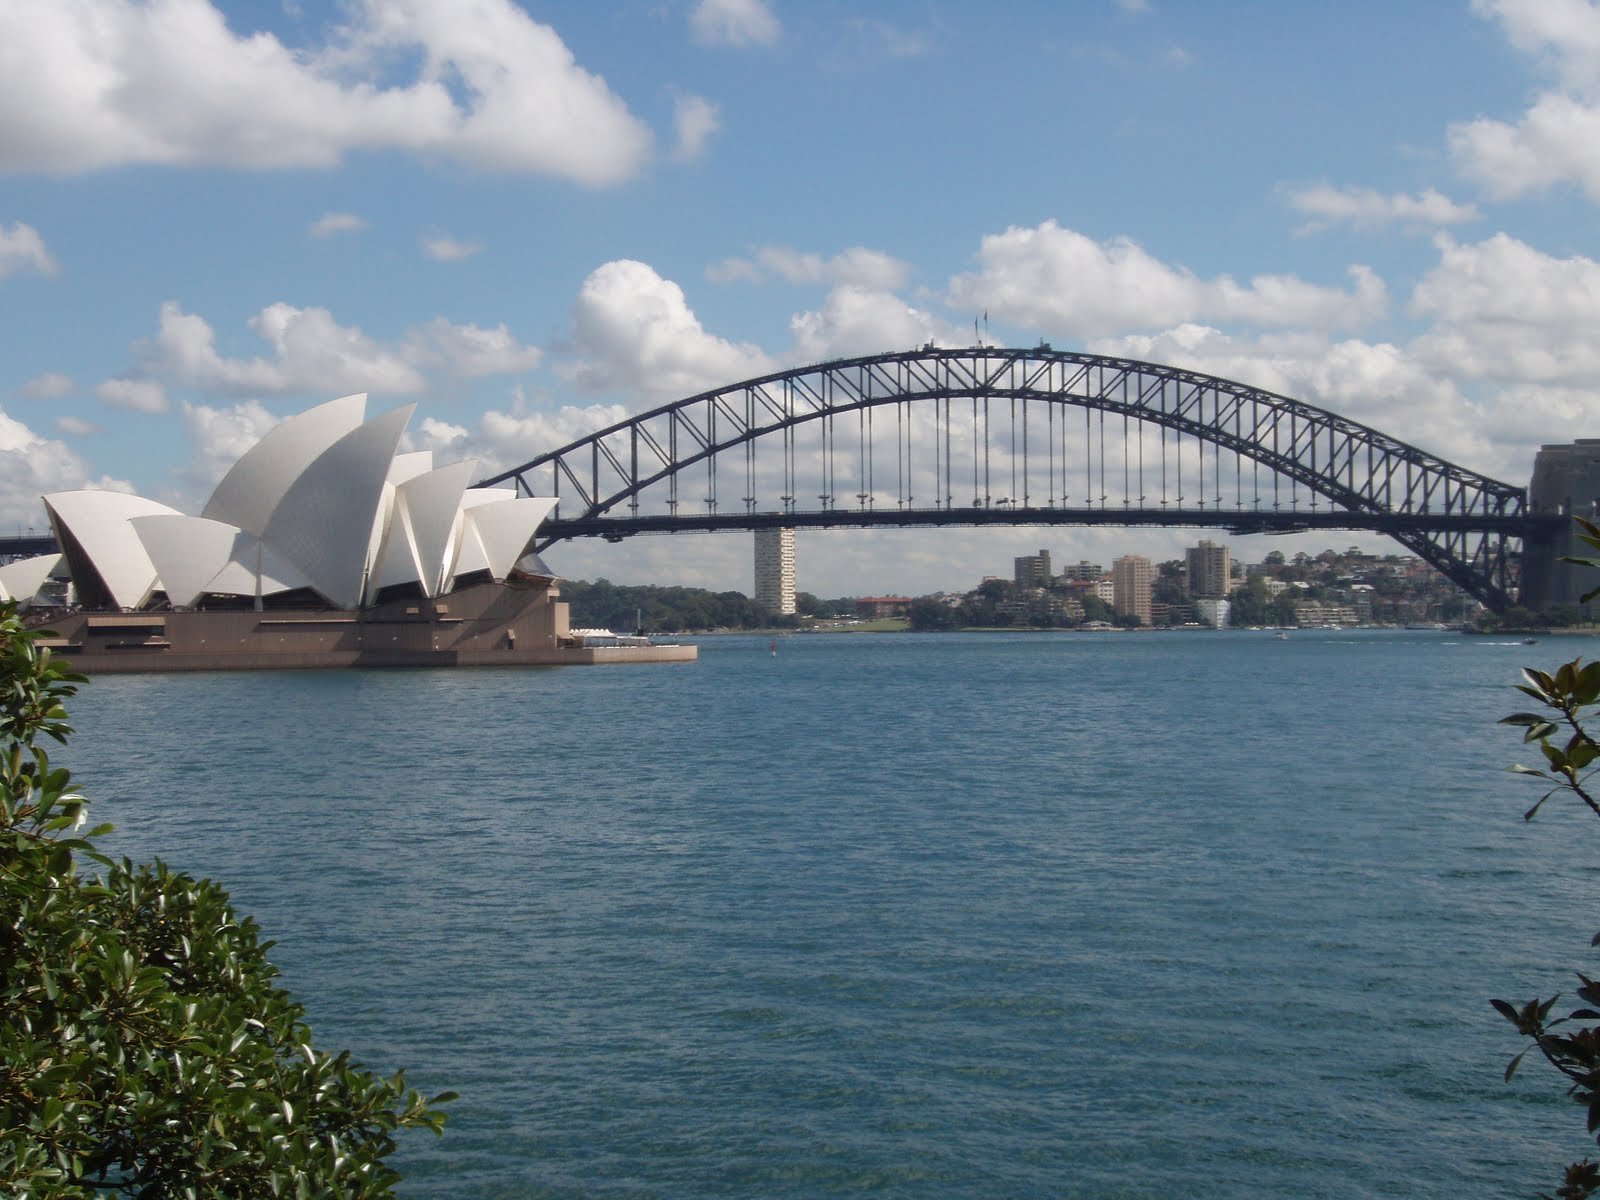 Harbour bridge. Мост Харбор-бридж в Сиднее. Харбор-бридж (Сидней, Австралия). Мост Харбор бридж в Австралии. Сиднейский арочный мост Харбор-бридж..